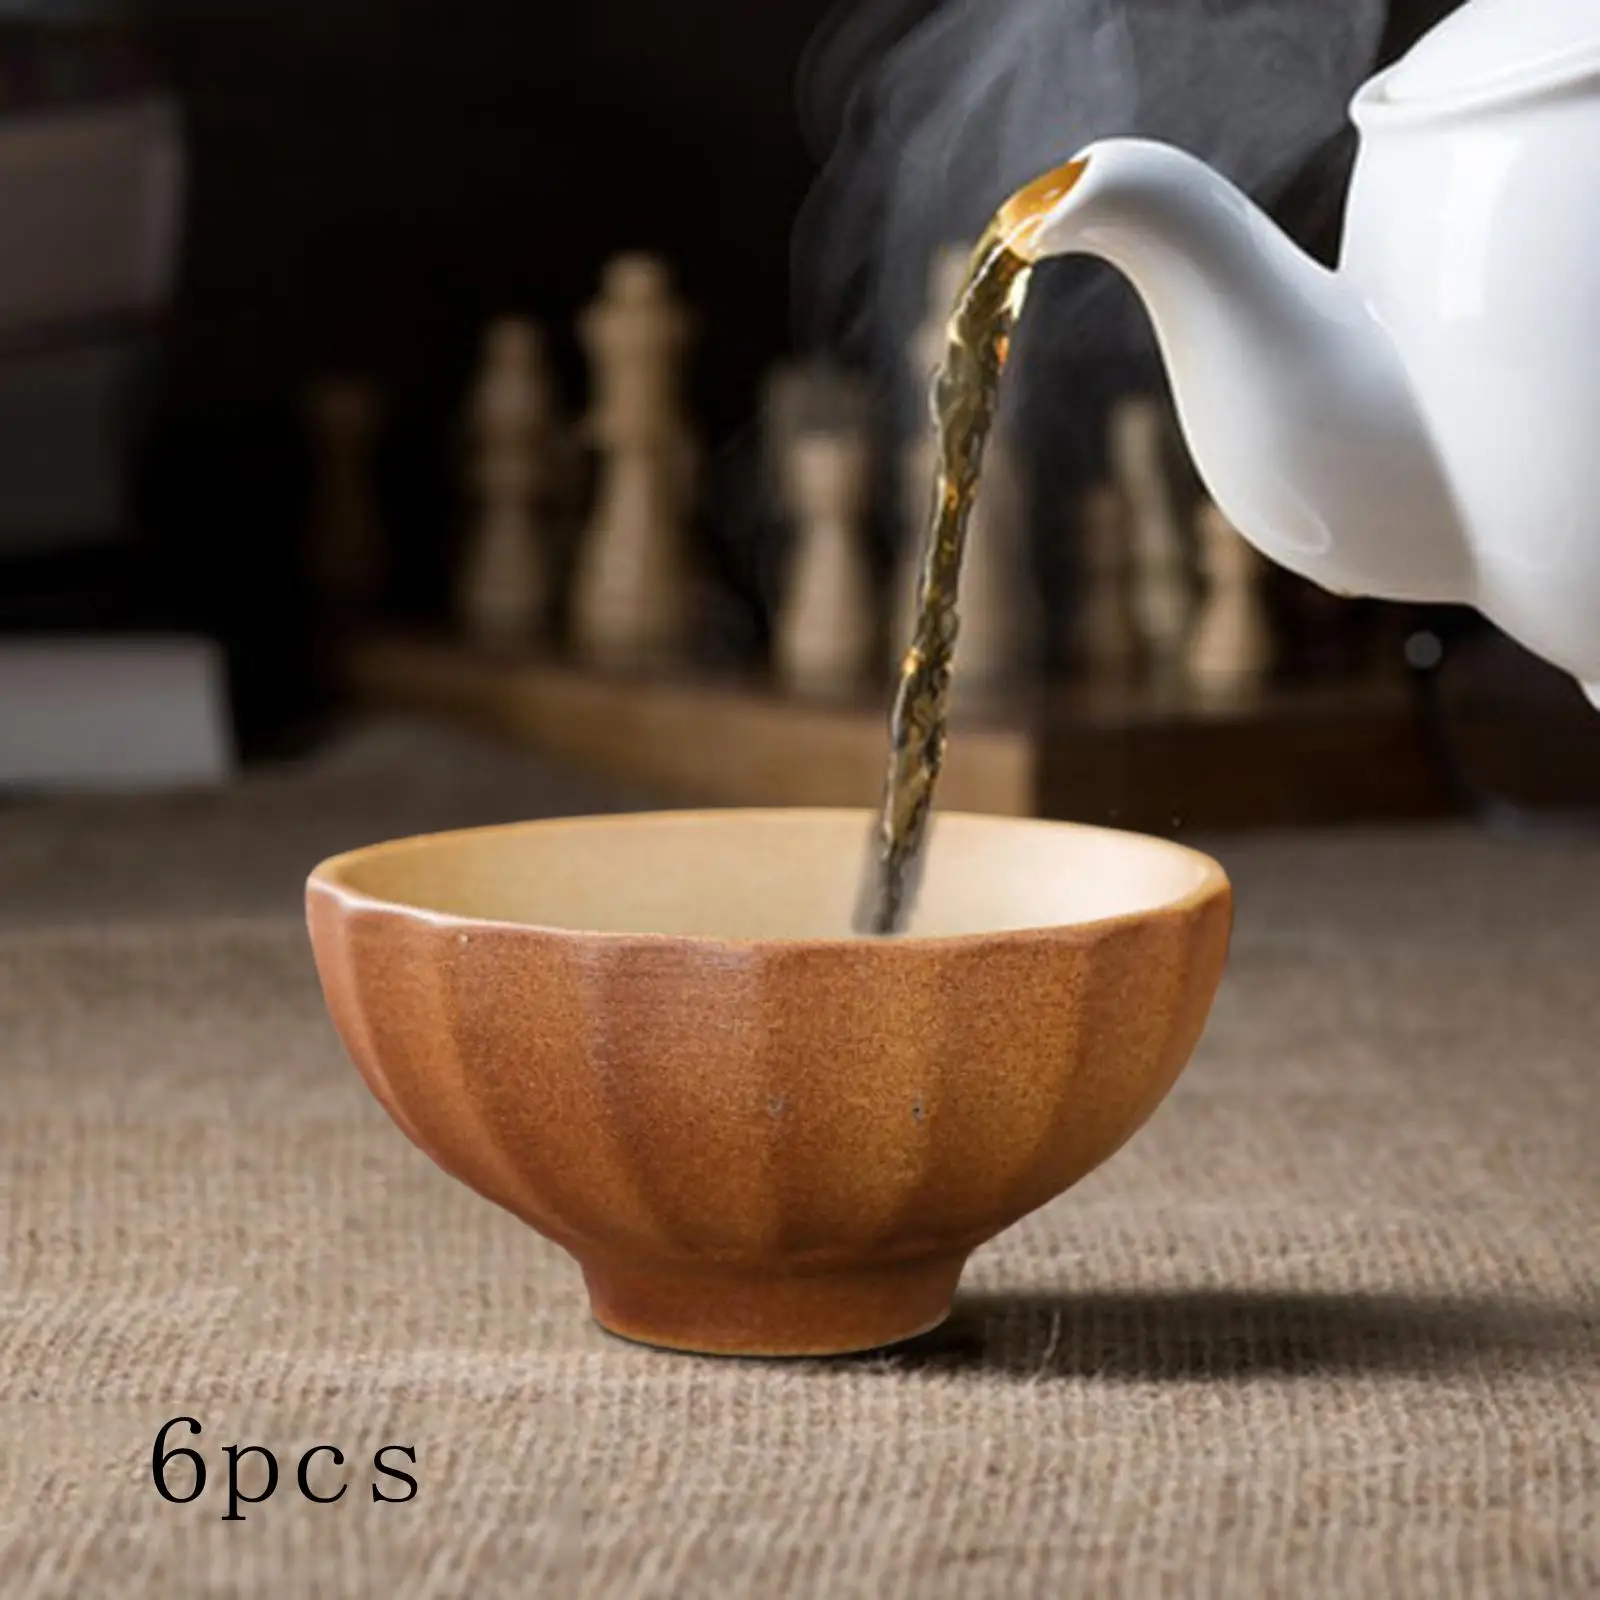 6 Pieces Japanese Cup Set Stoves Boiled Tea Traditional Petal Shape Kung Fu Tea Cup Mug for Hotel Cafe Home Office Matcha Tea